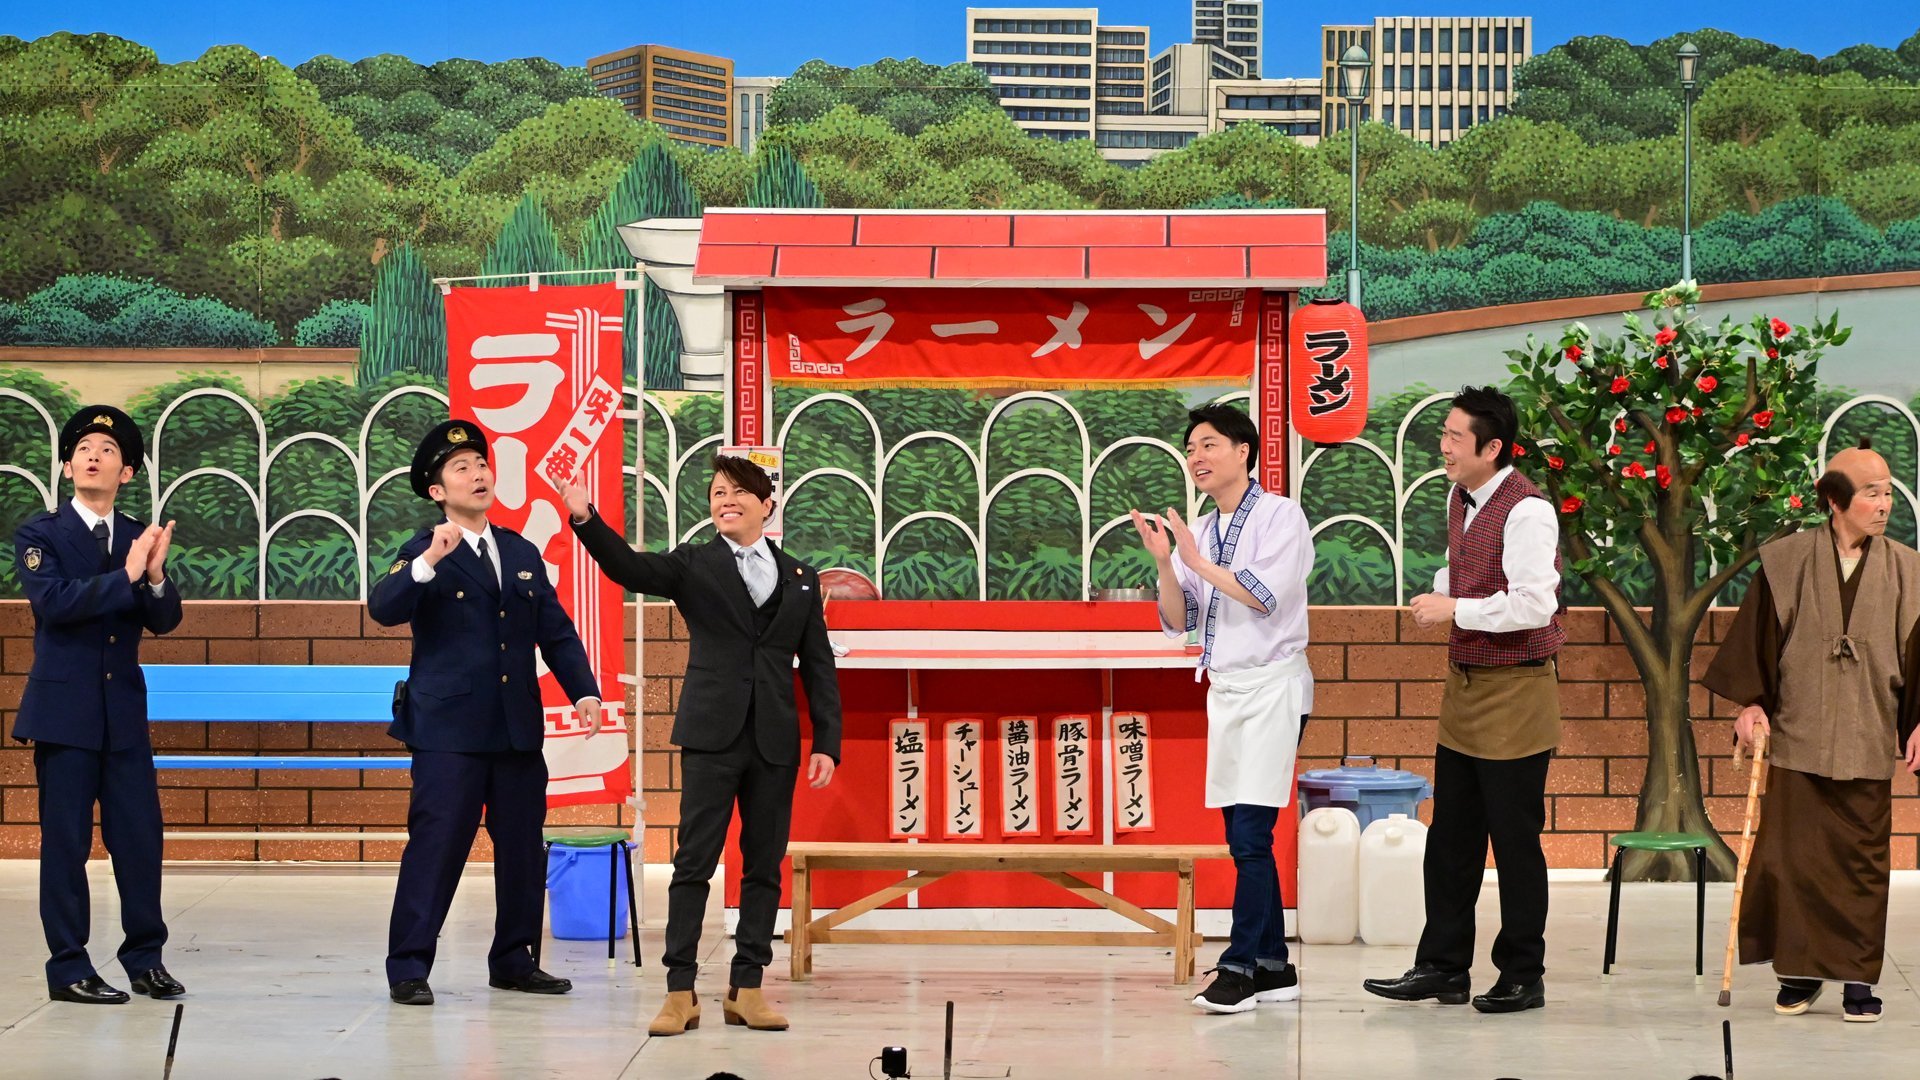 FANY マガジン：西川貴教とオリックス3選手が吉本新喜劇でアドリブ全開! 「台本読み合わせからアドリブがすごくて…」